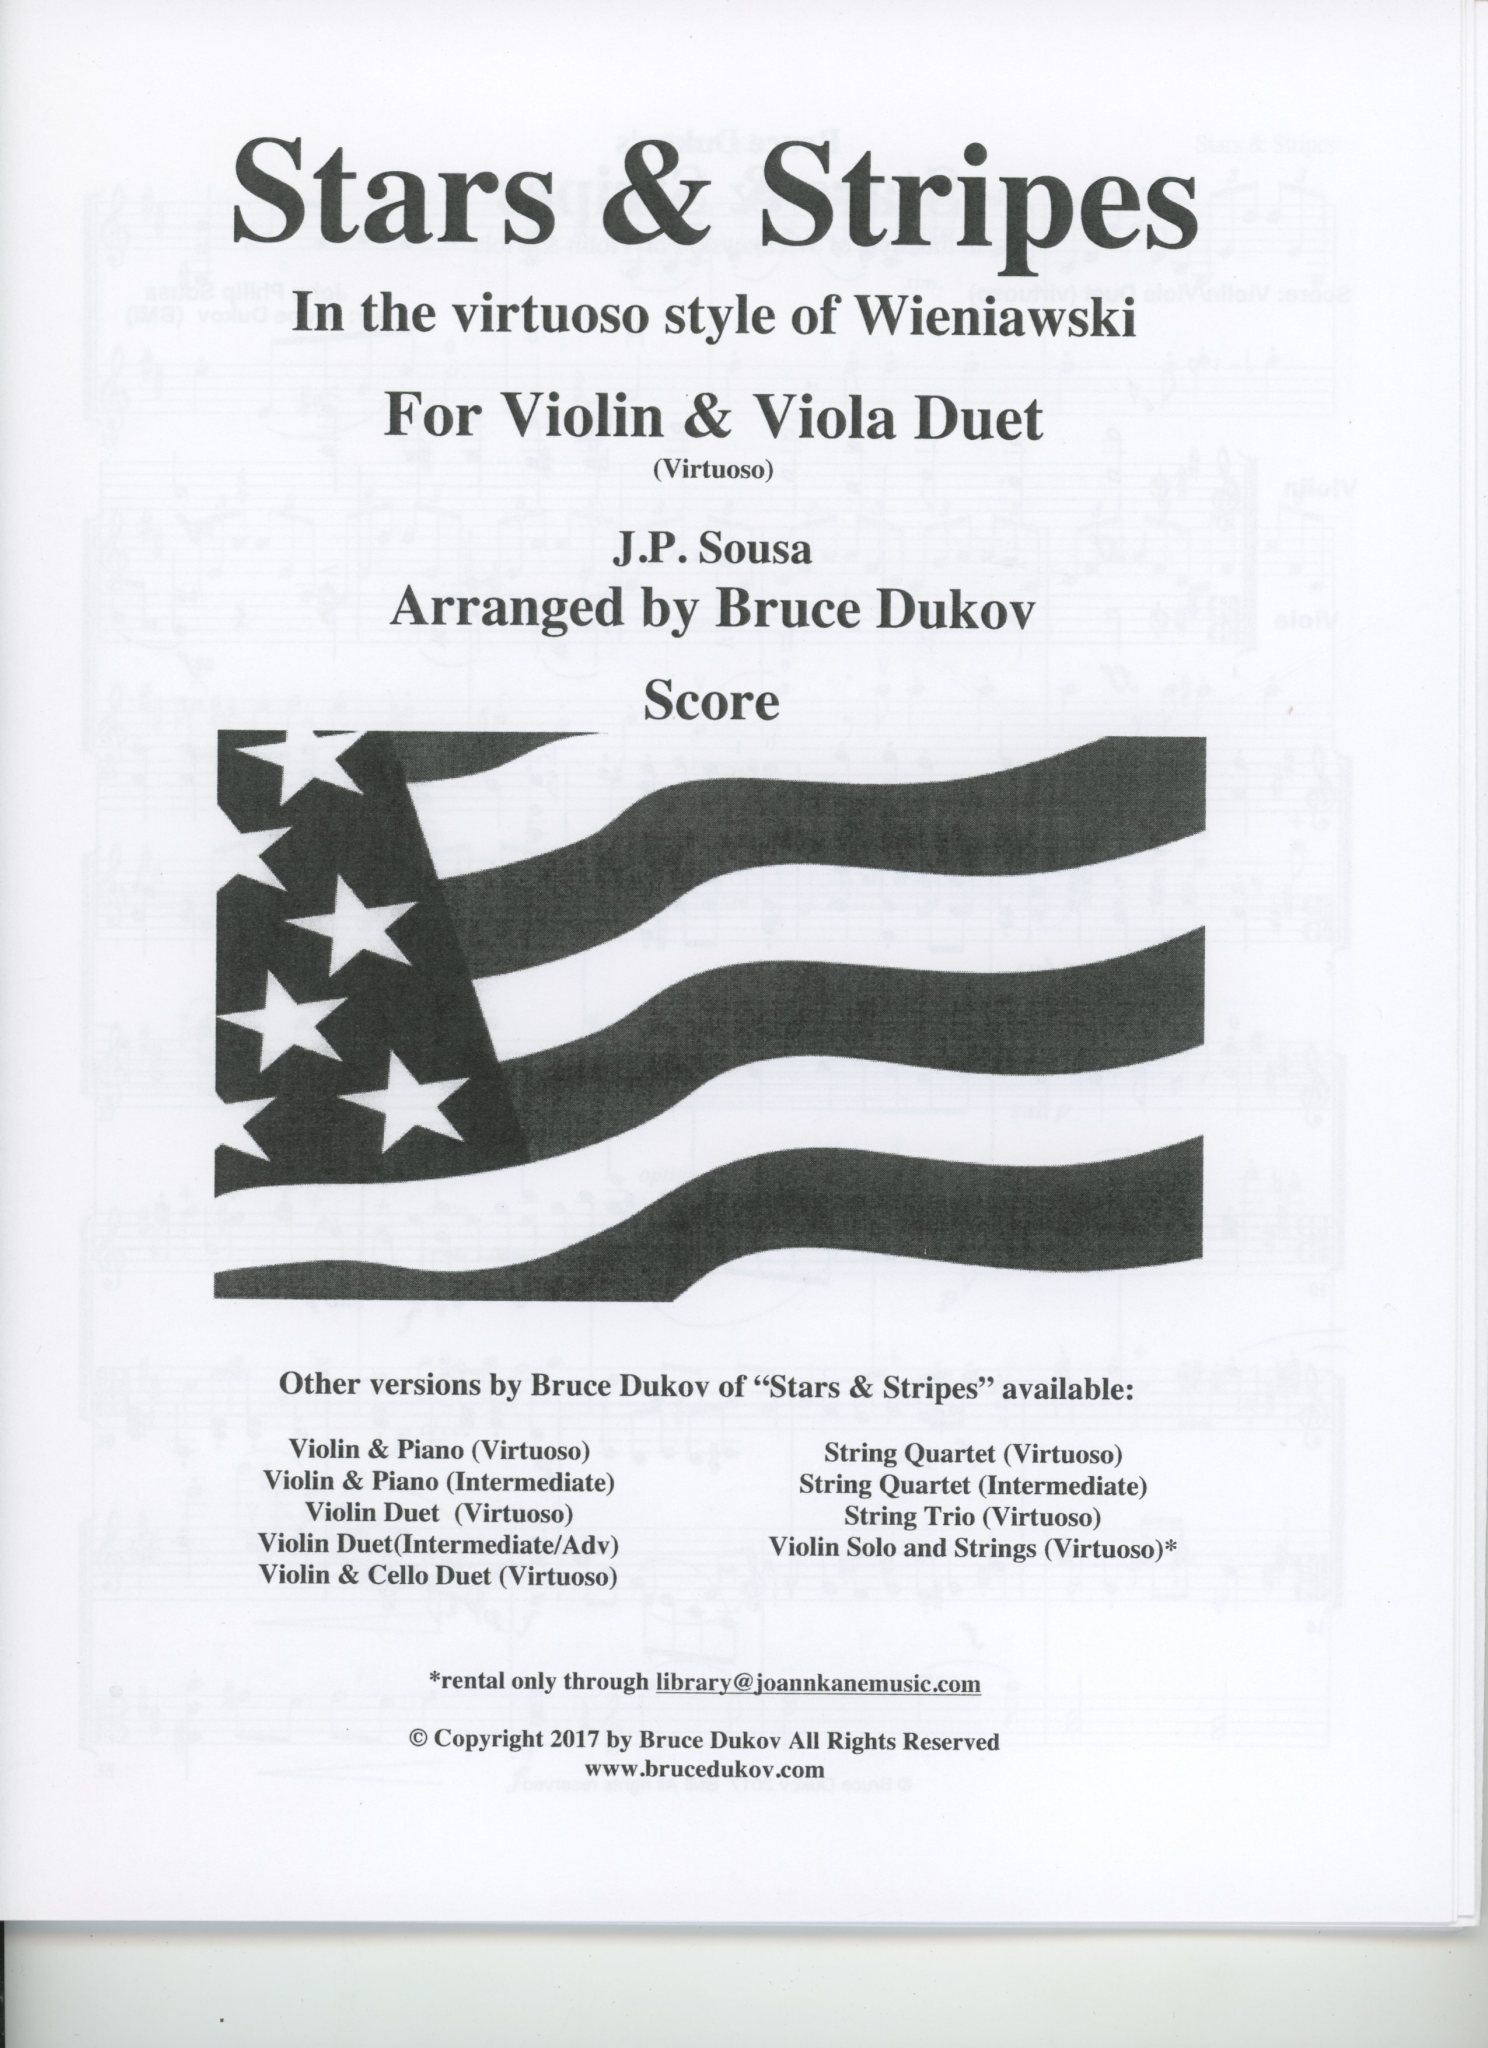 Bruce Dukov Sousa, J.P. (Bruce Dukov): Stars & Stripes Duet, in the style of Wieniawski, Virtuoso level, parts & score, violin and viola duet